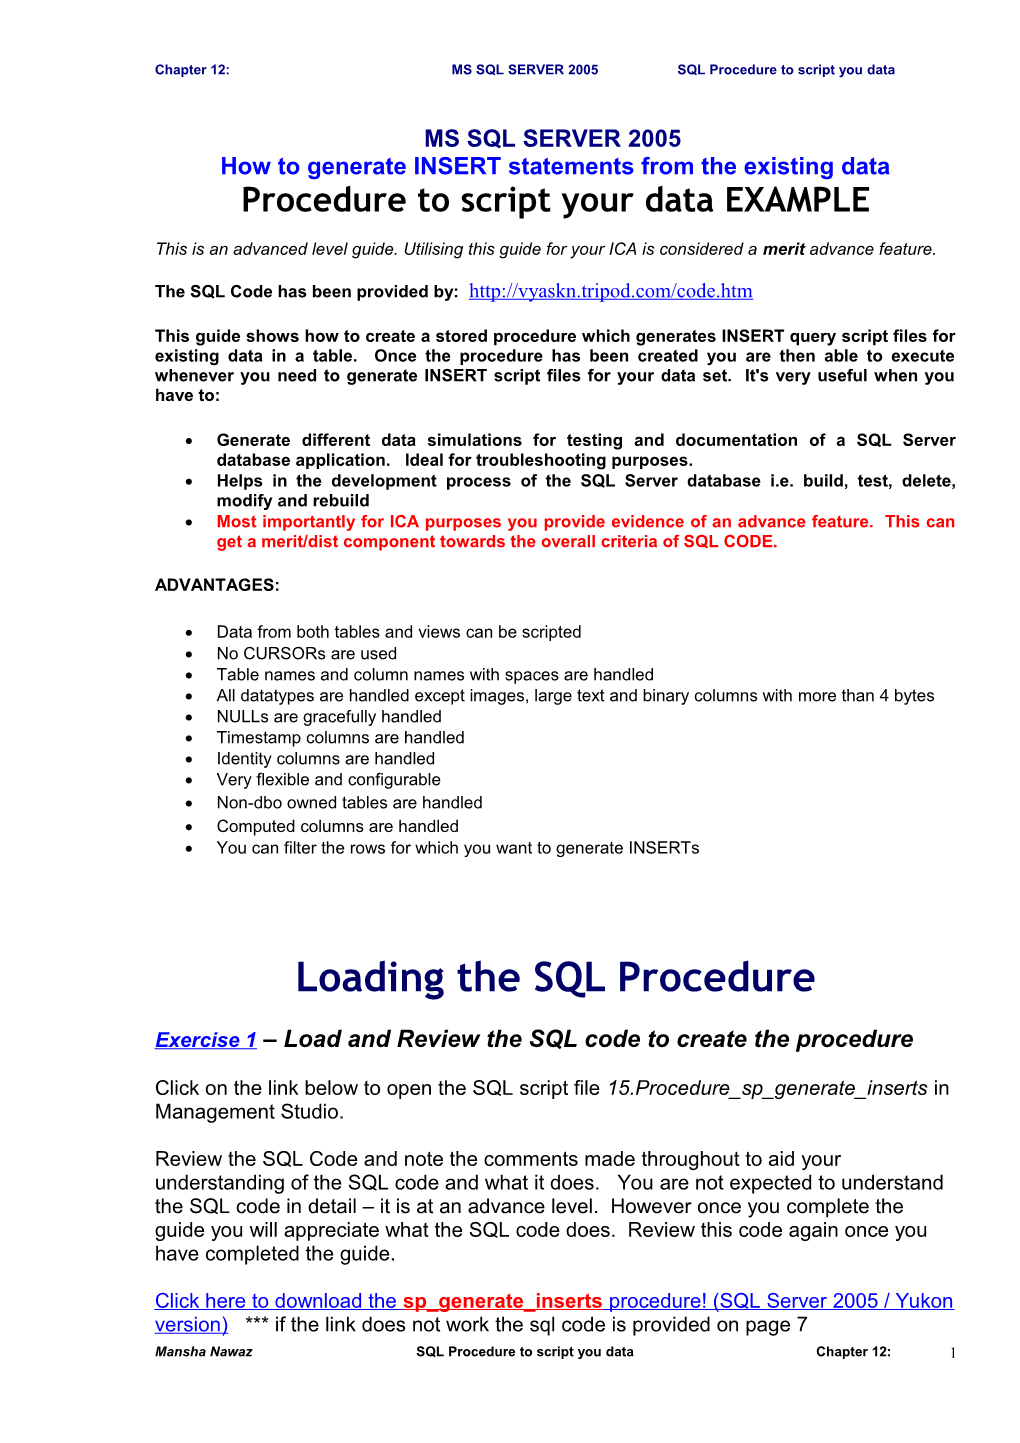 Chapter 12: MS SQL SERVER 2005 SQL Procedure to Script You Data